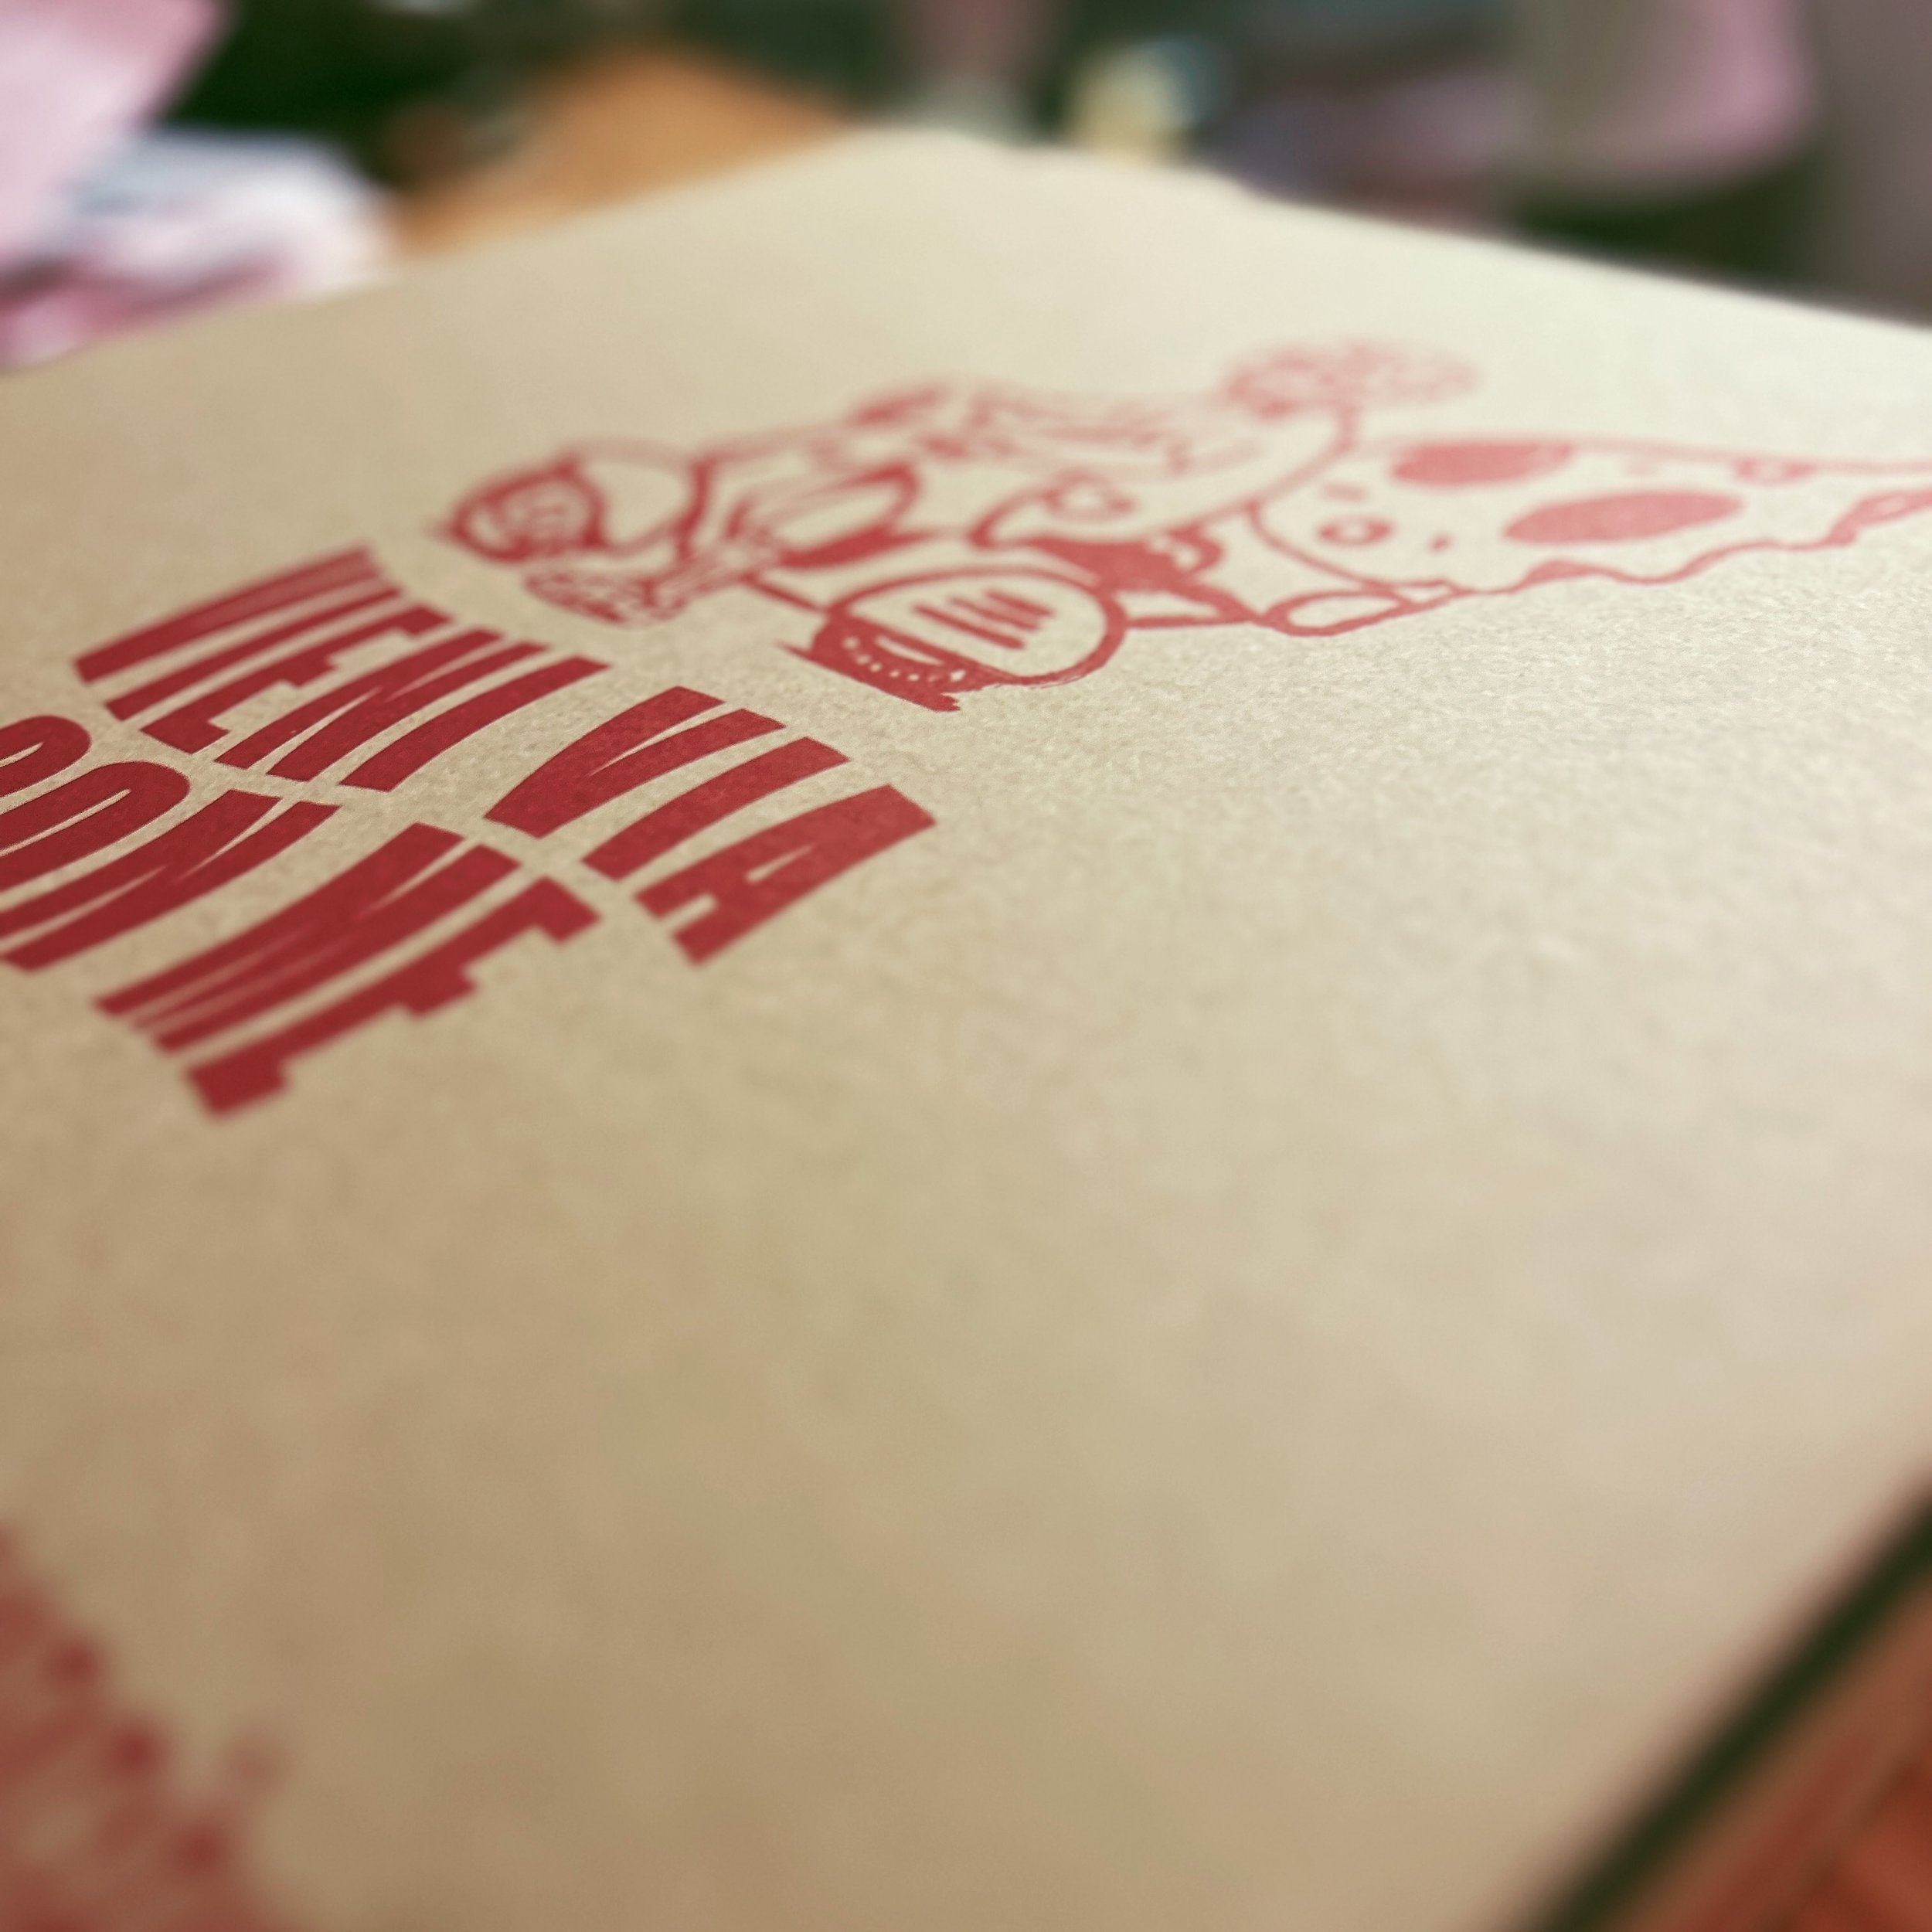 Diumenge vespre, delivery 🔥
Ja has sopat? https://www.mecanicpizza.com/
-
#MecanicPizza #SantCugat #PizzaLovers #FoodiesSantCugat #PizzaArtesana